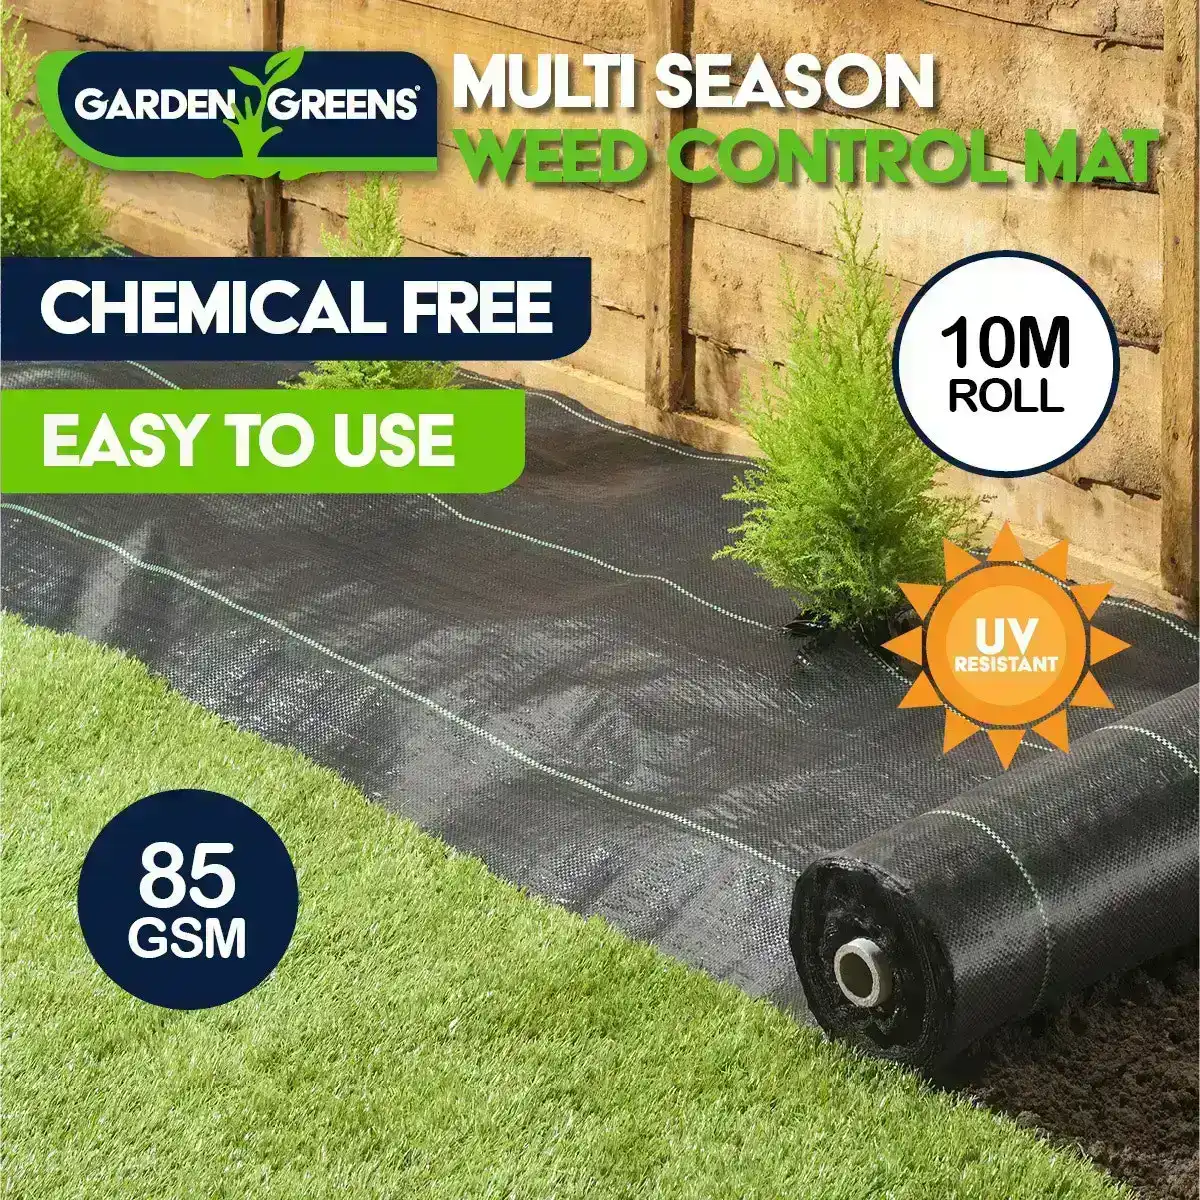 Garden Greens 10m x 1m Weed Control Fabric Mat Garden Stop Weeds Multi Season